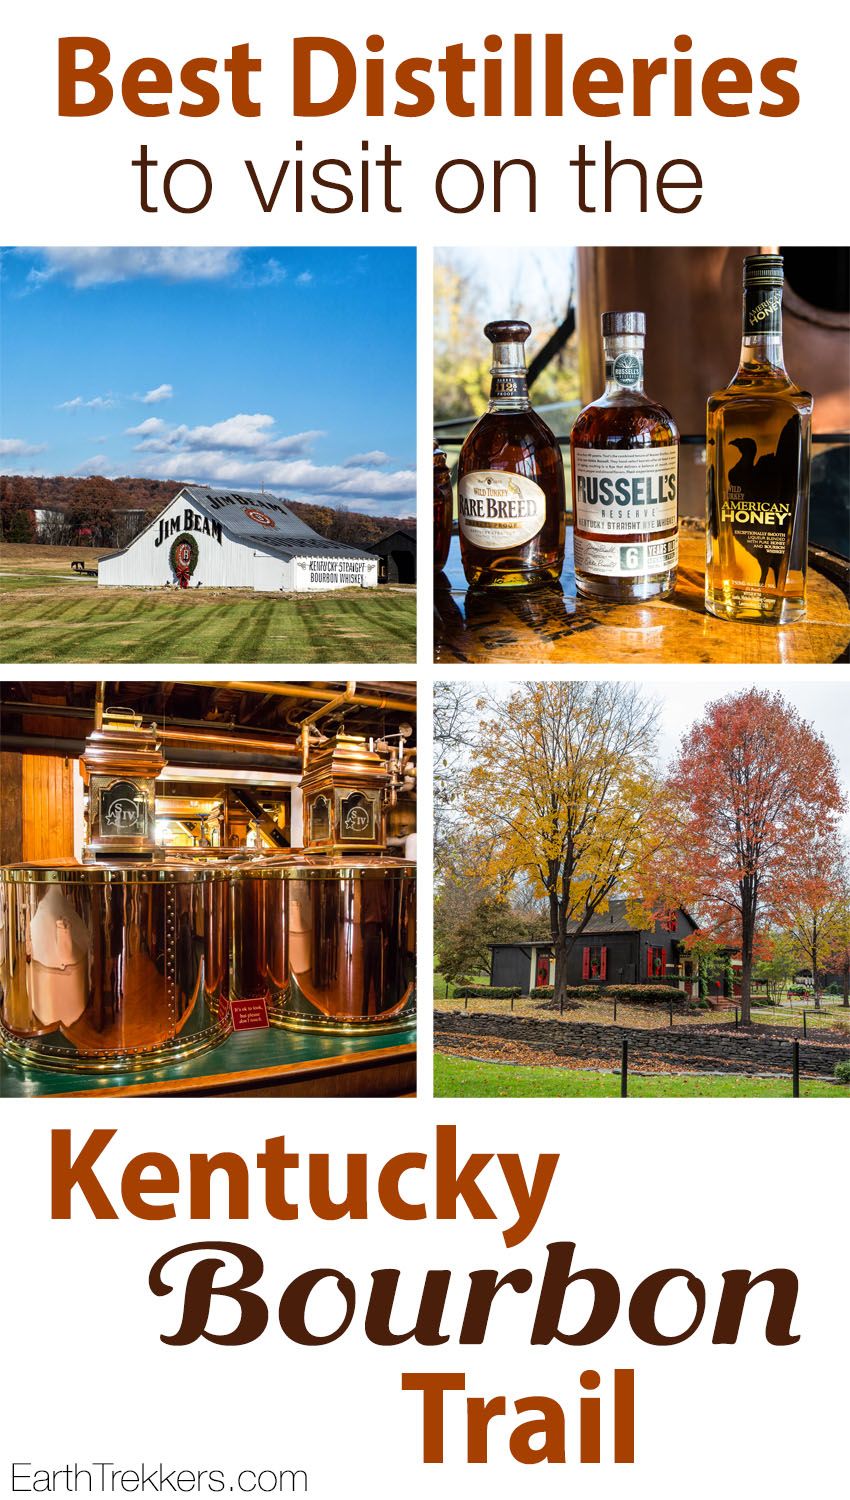 Best Distilleries to Visit on the Kentucky Bourbon Trail | Earth Trekkers